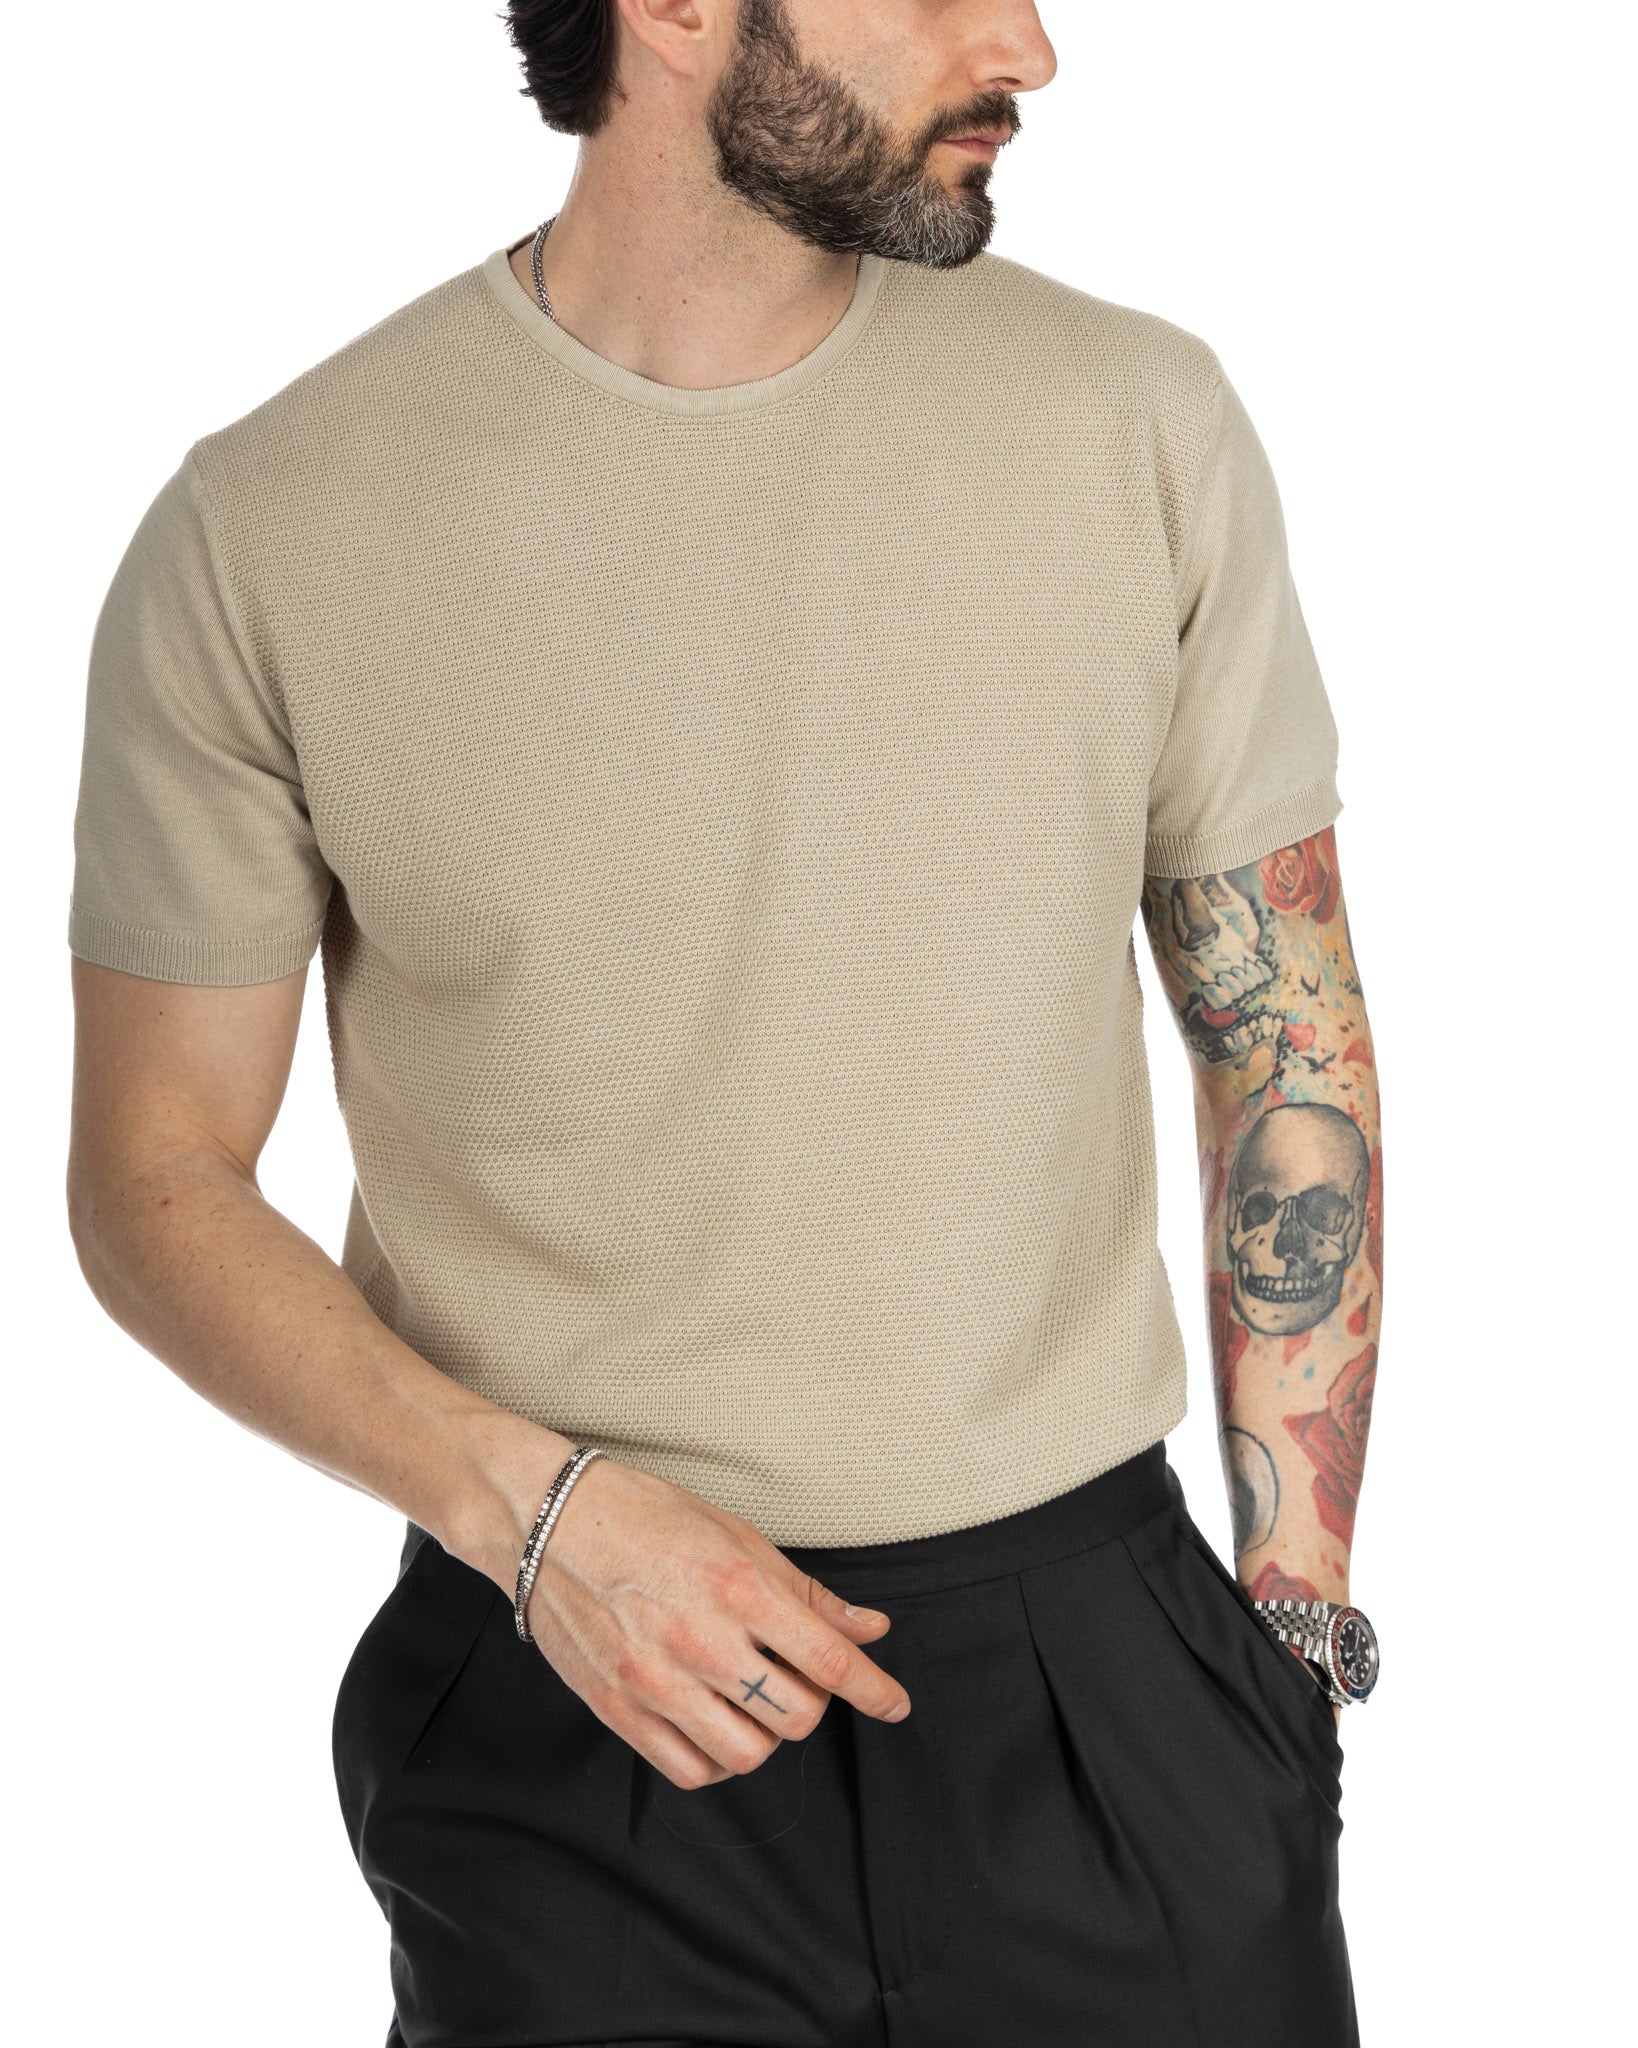 Lorenzo - t-shirt en maille jacquard beige